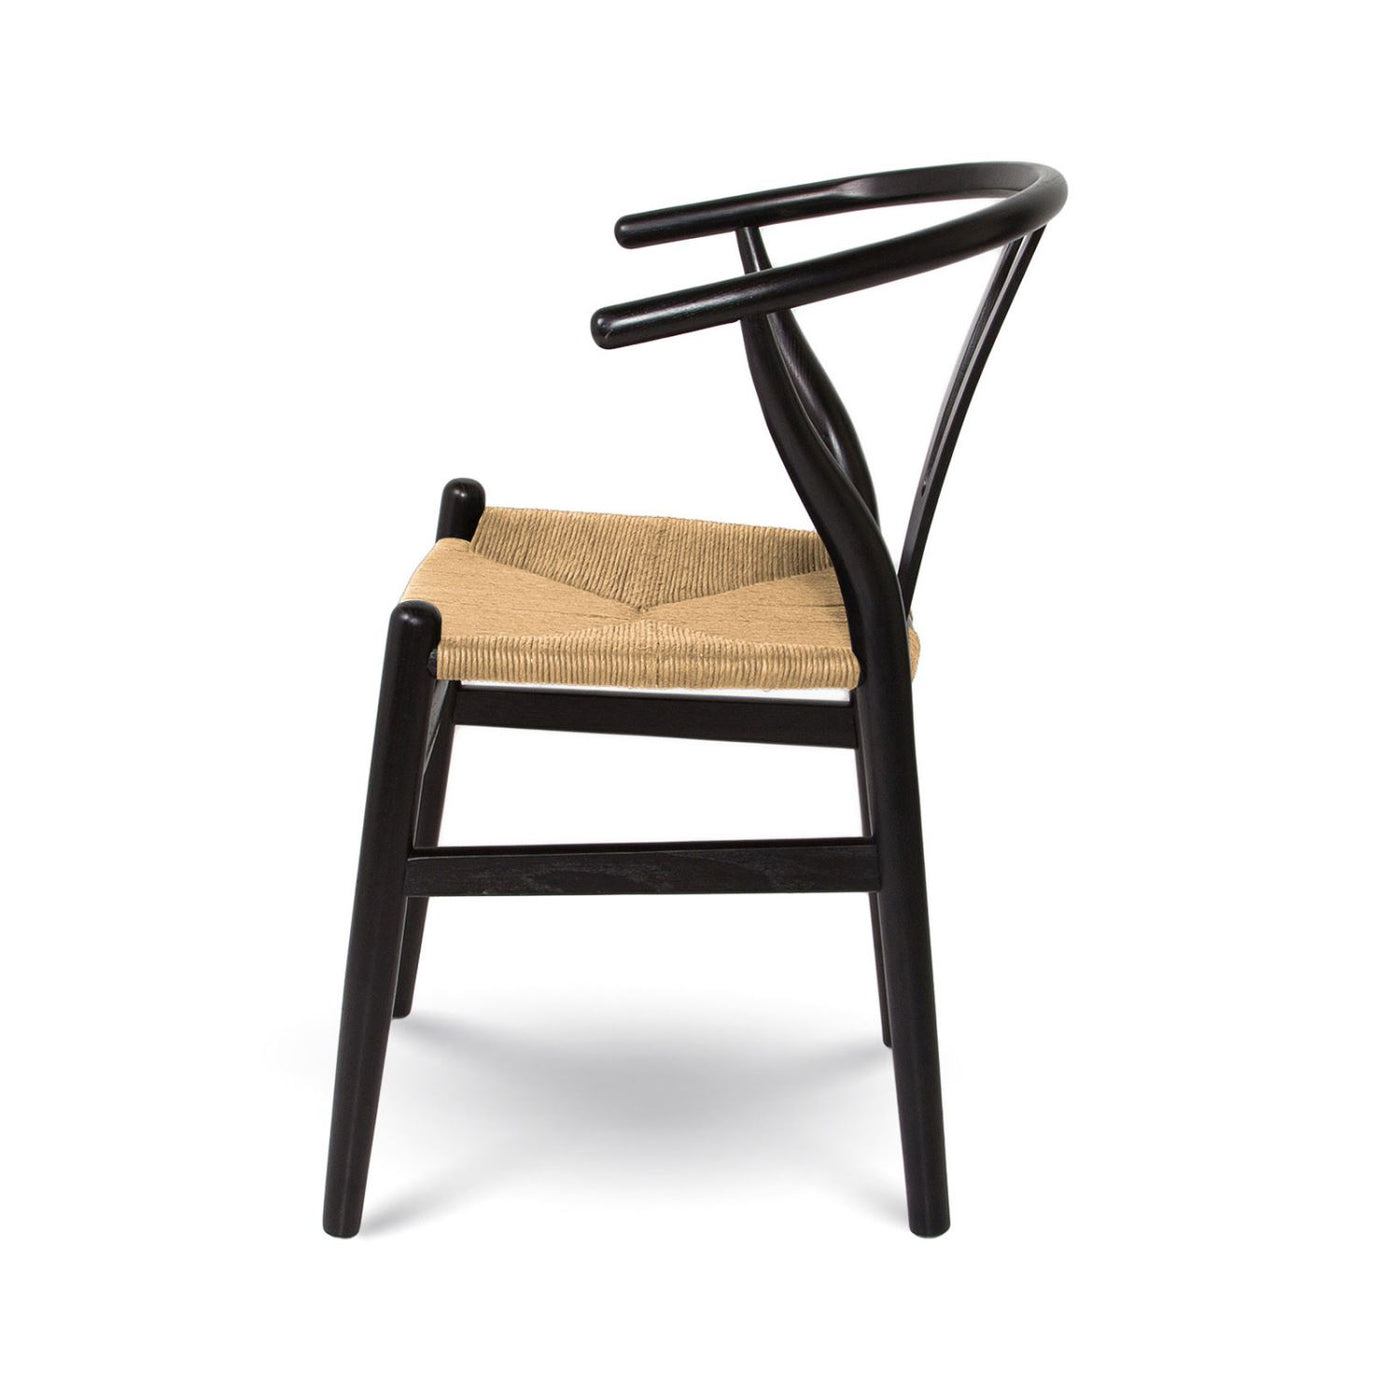 Jessbul Wishbone Dining Chair - Black/Natural